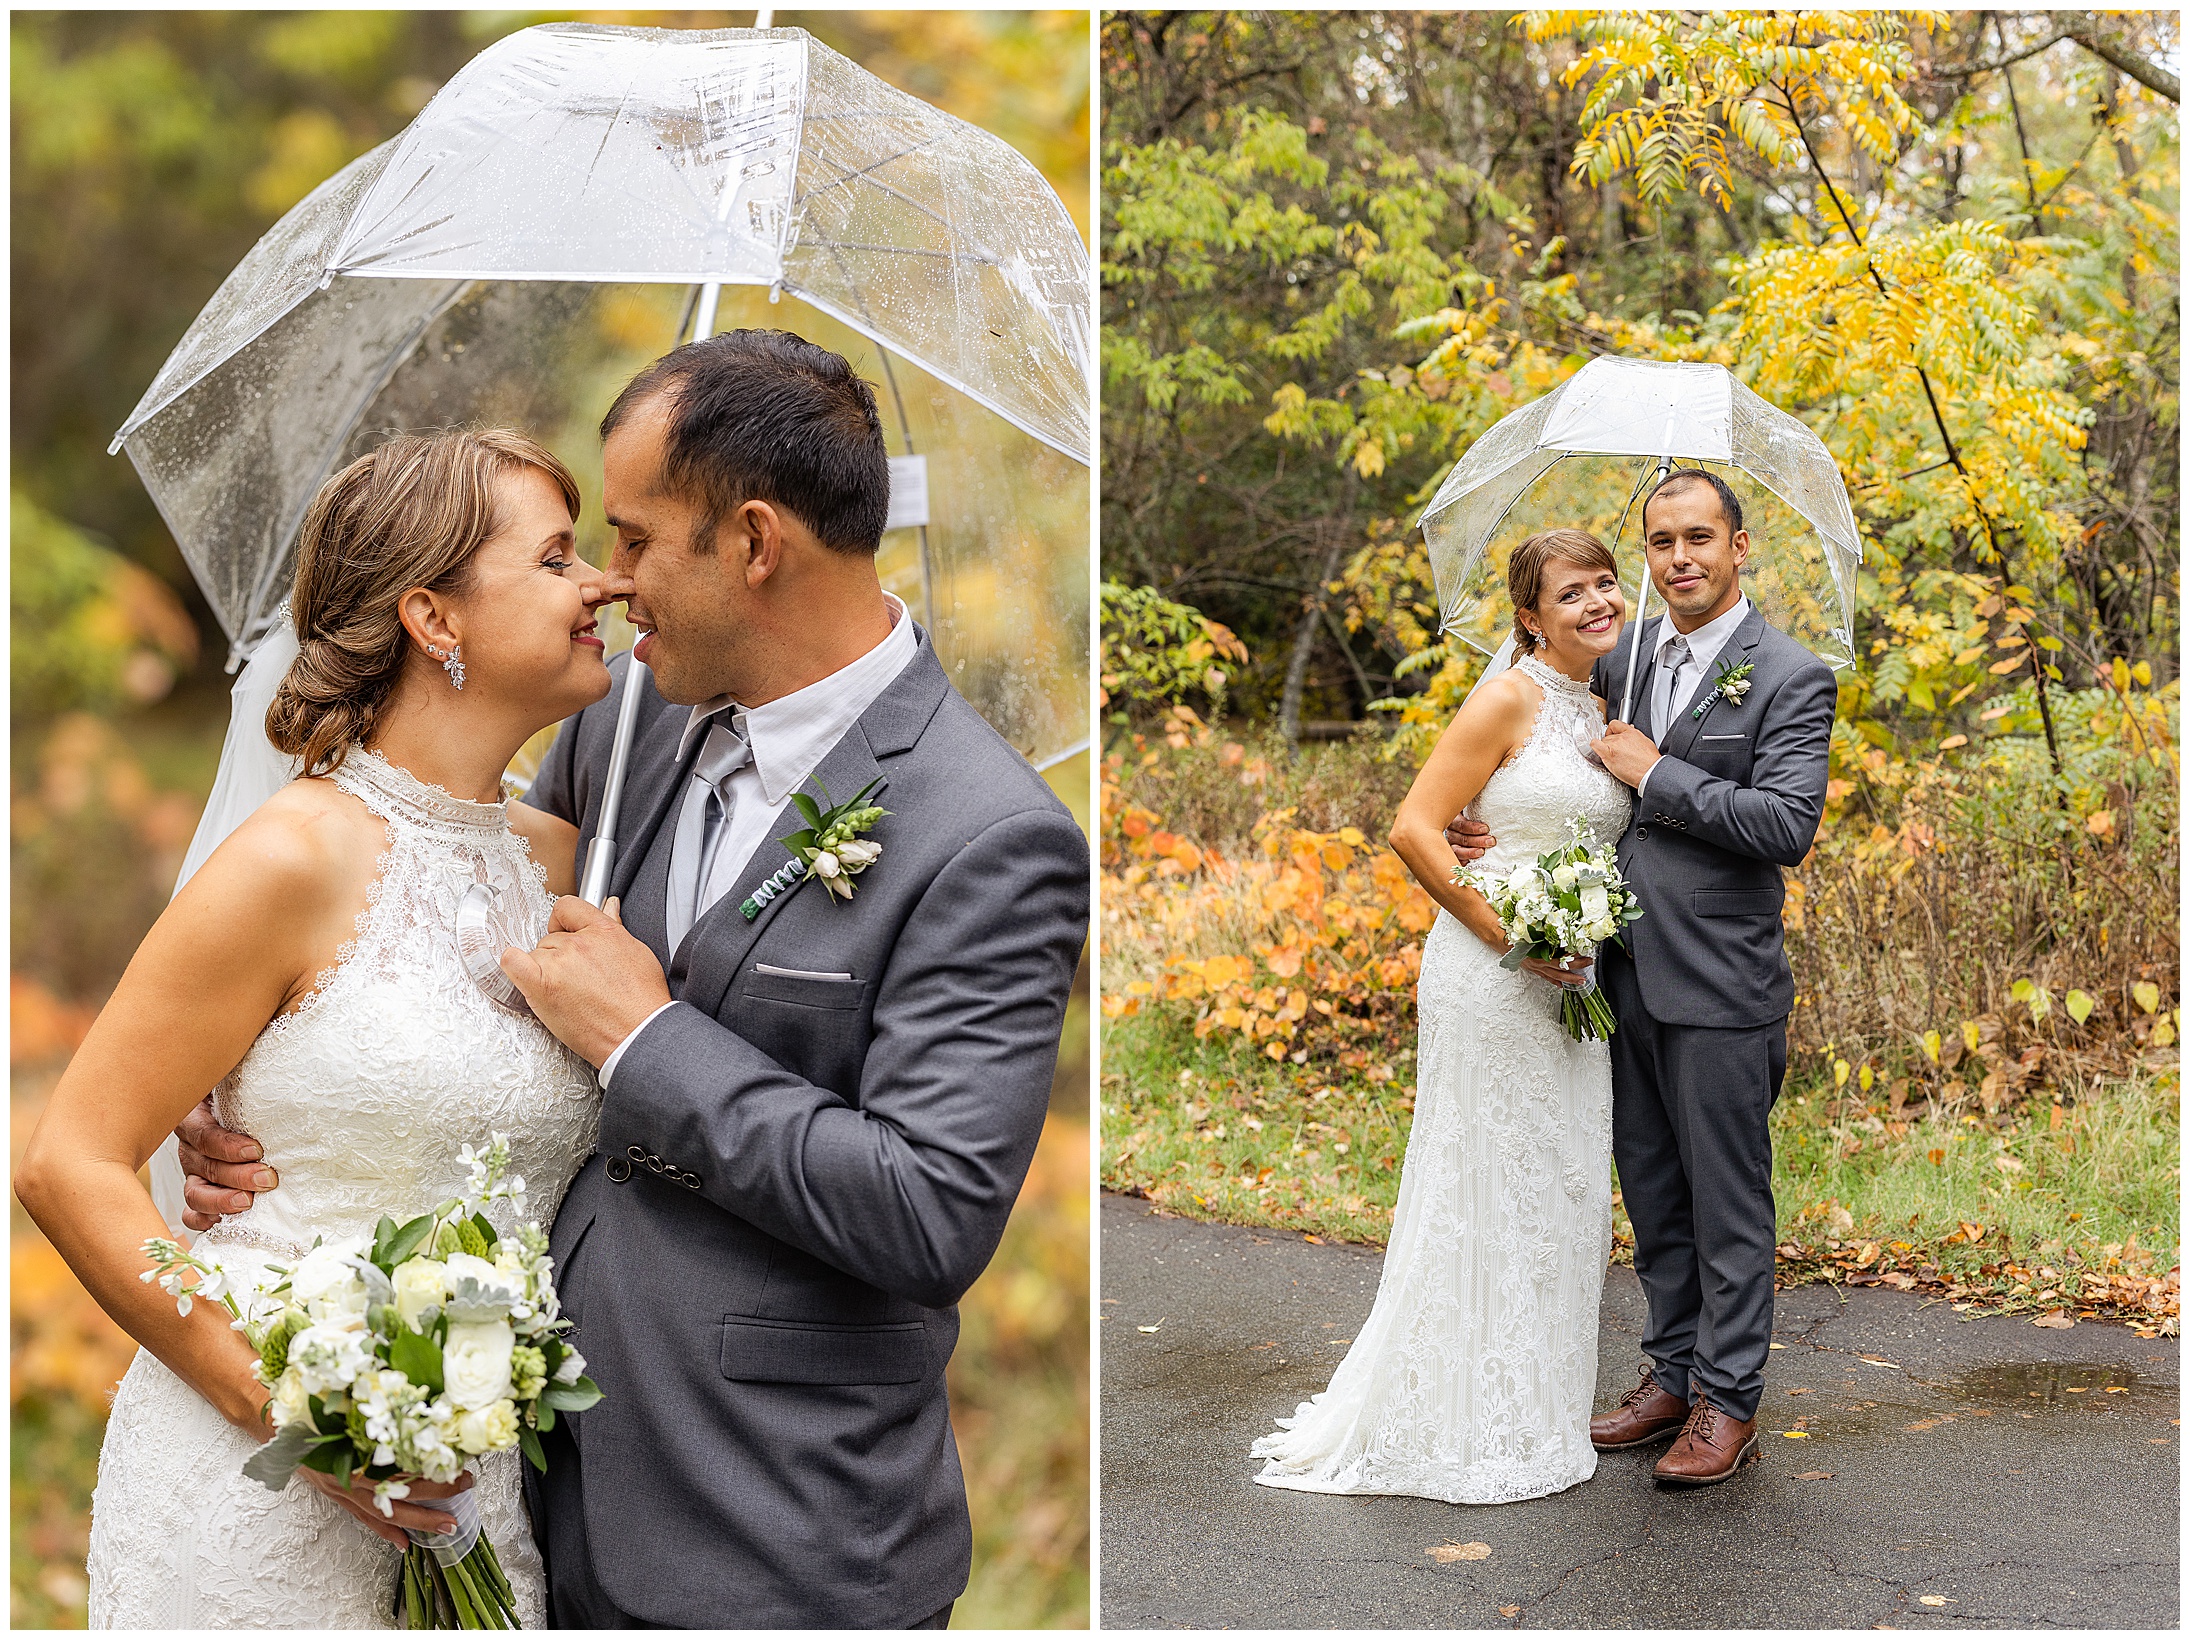 Bidwell Park Wedding November Rain Redwood Grove Umbrella Bowtie Suspenders Wagon,